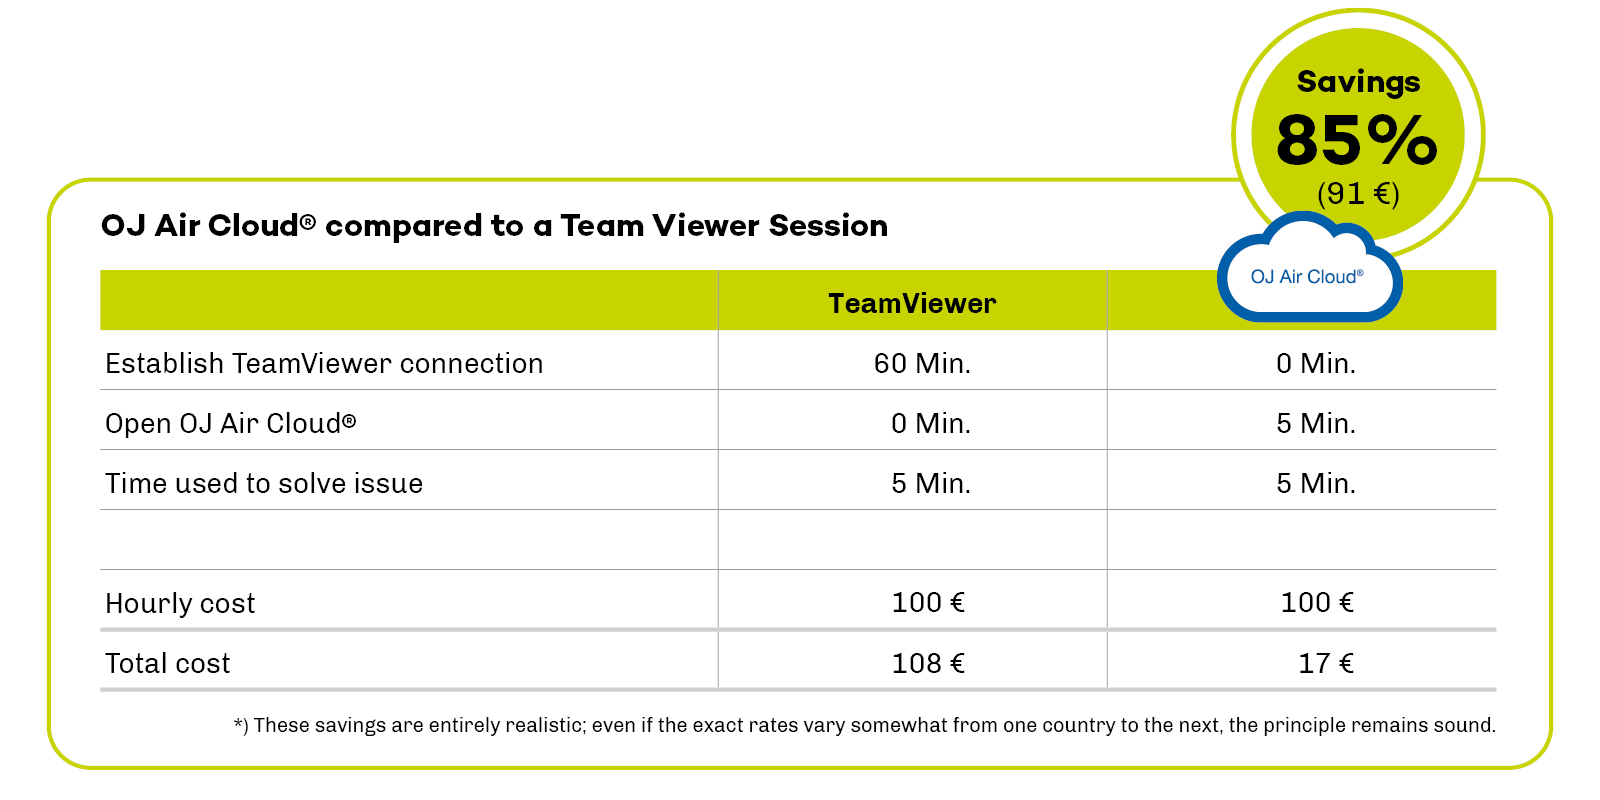 OJ Air Cloud compared to a Team Viewer Session